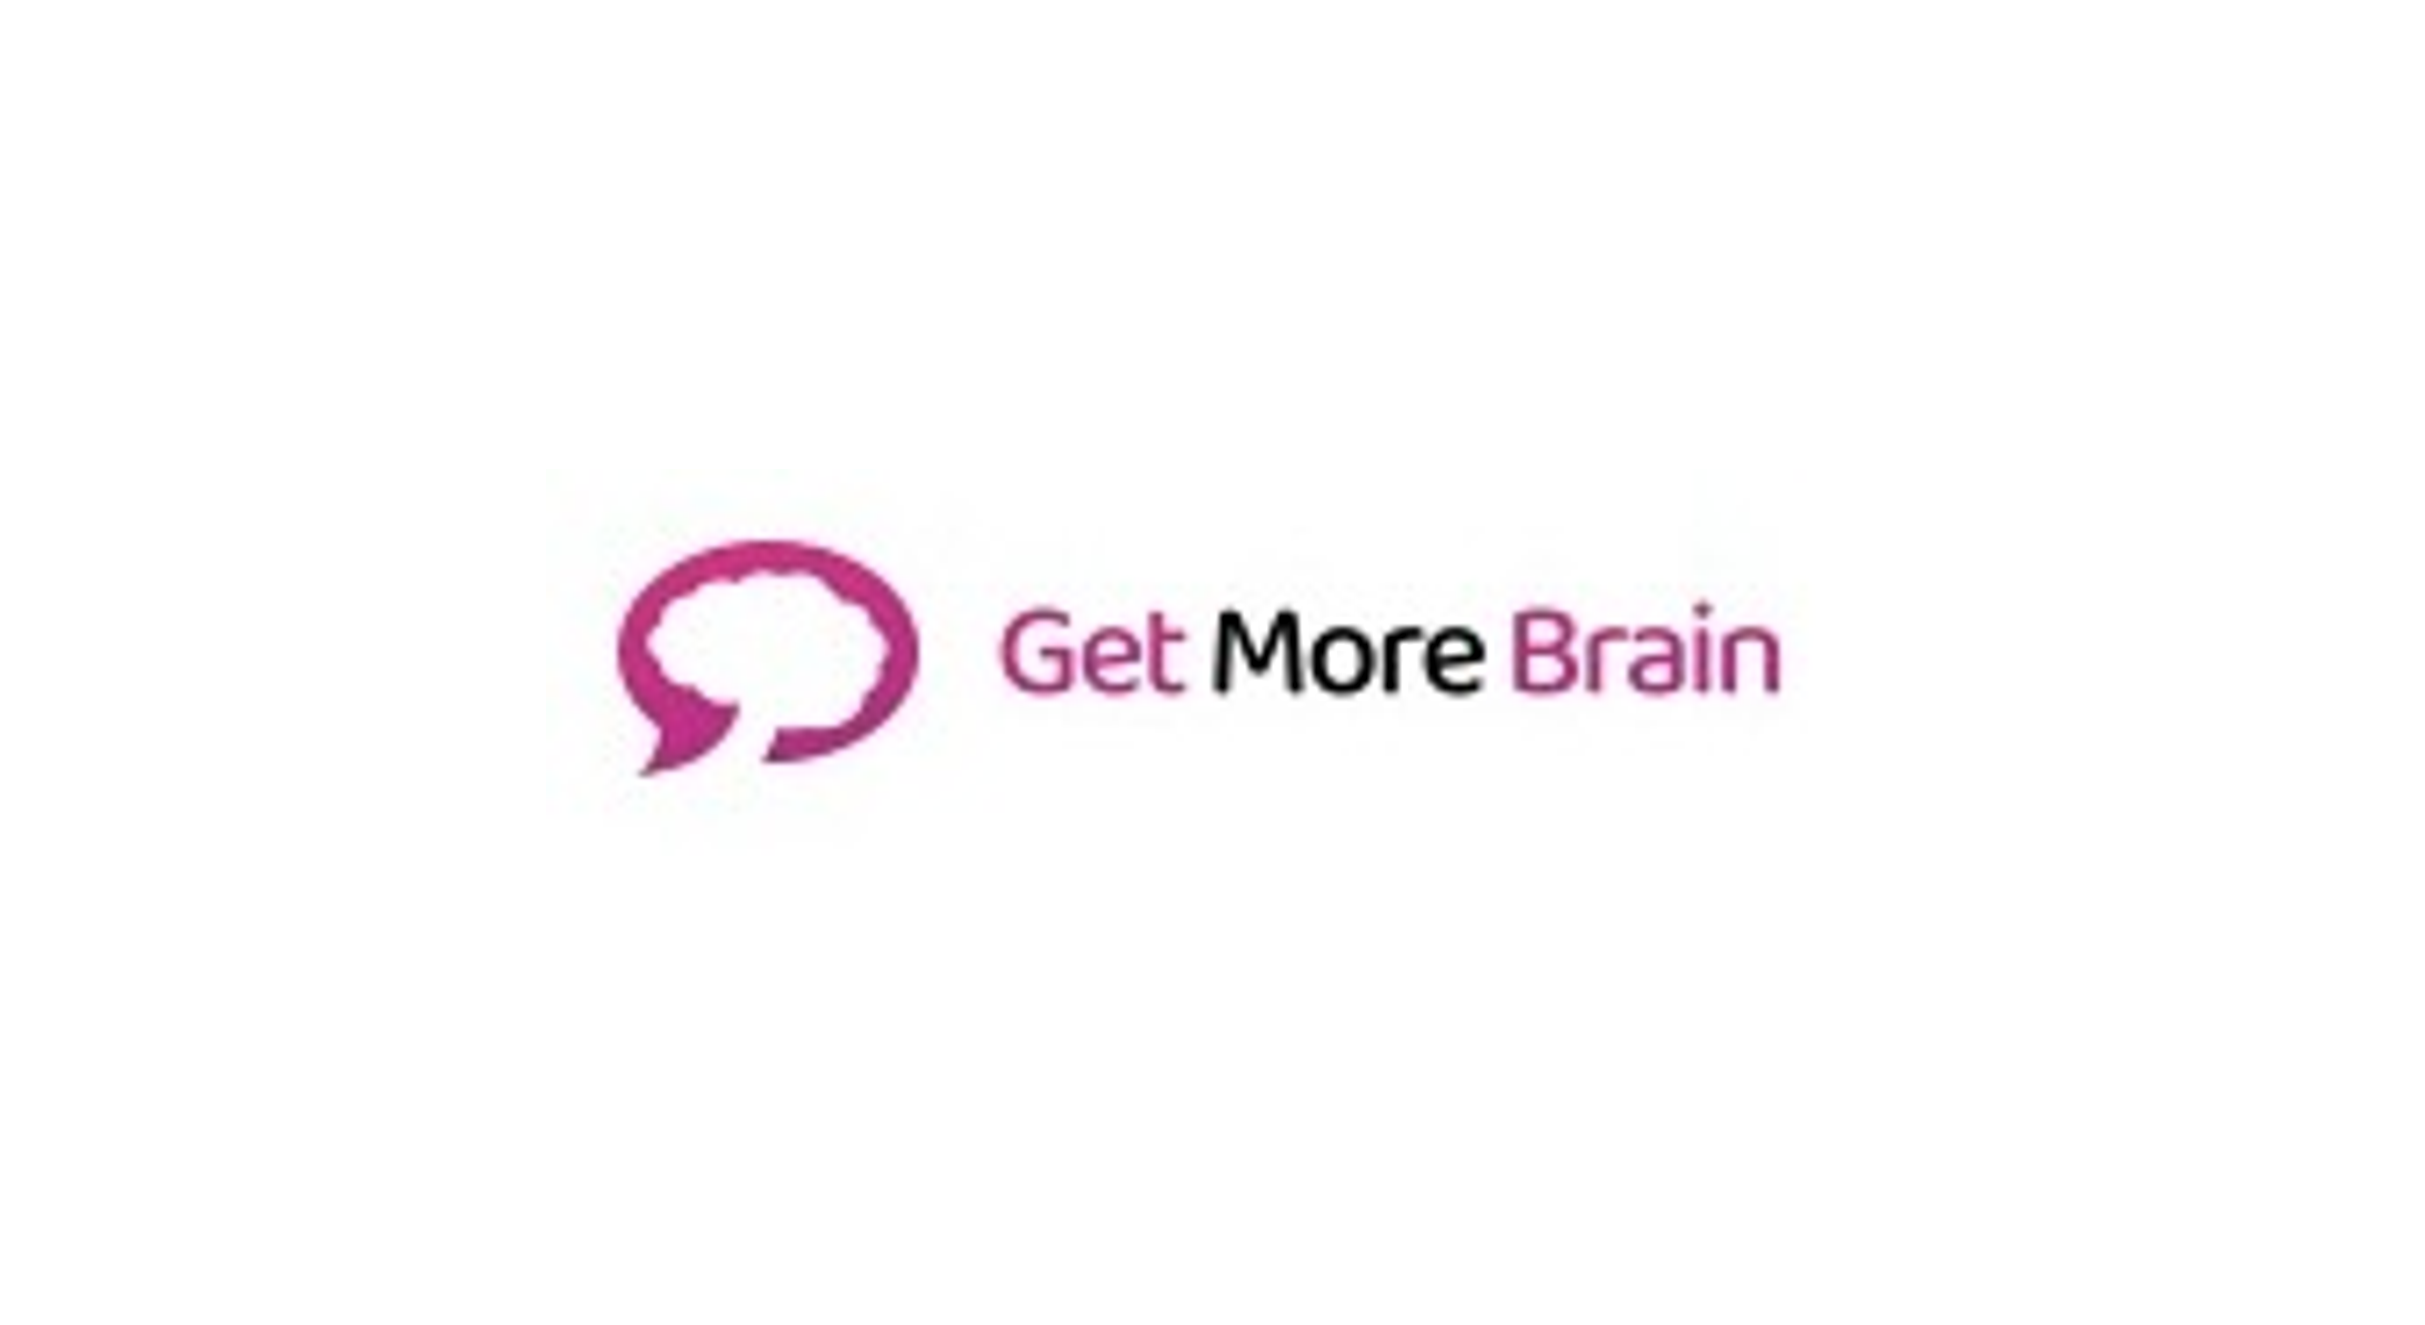 Get More Brain